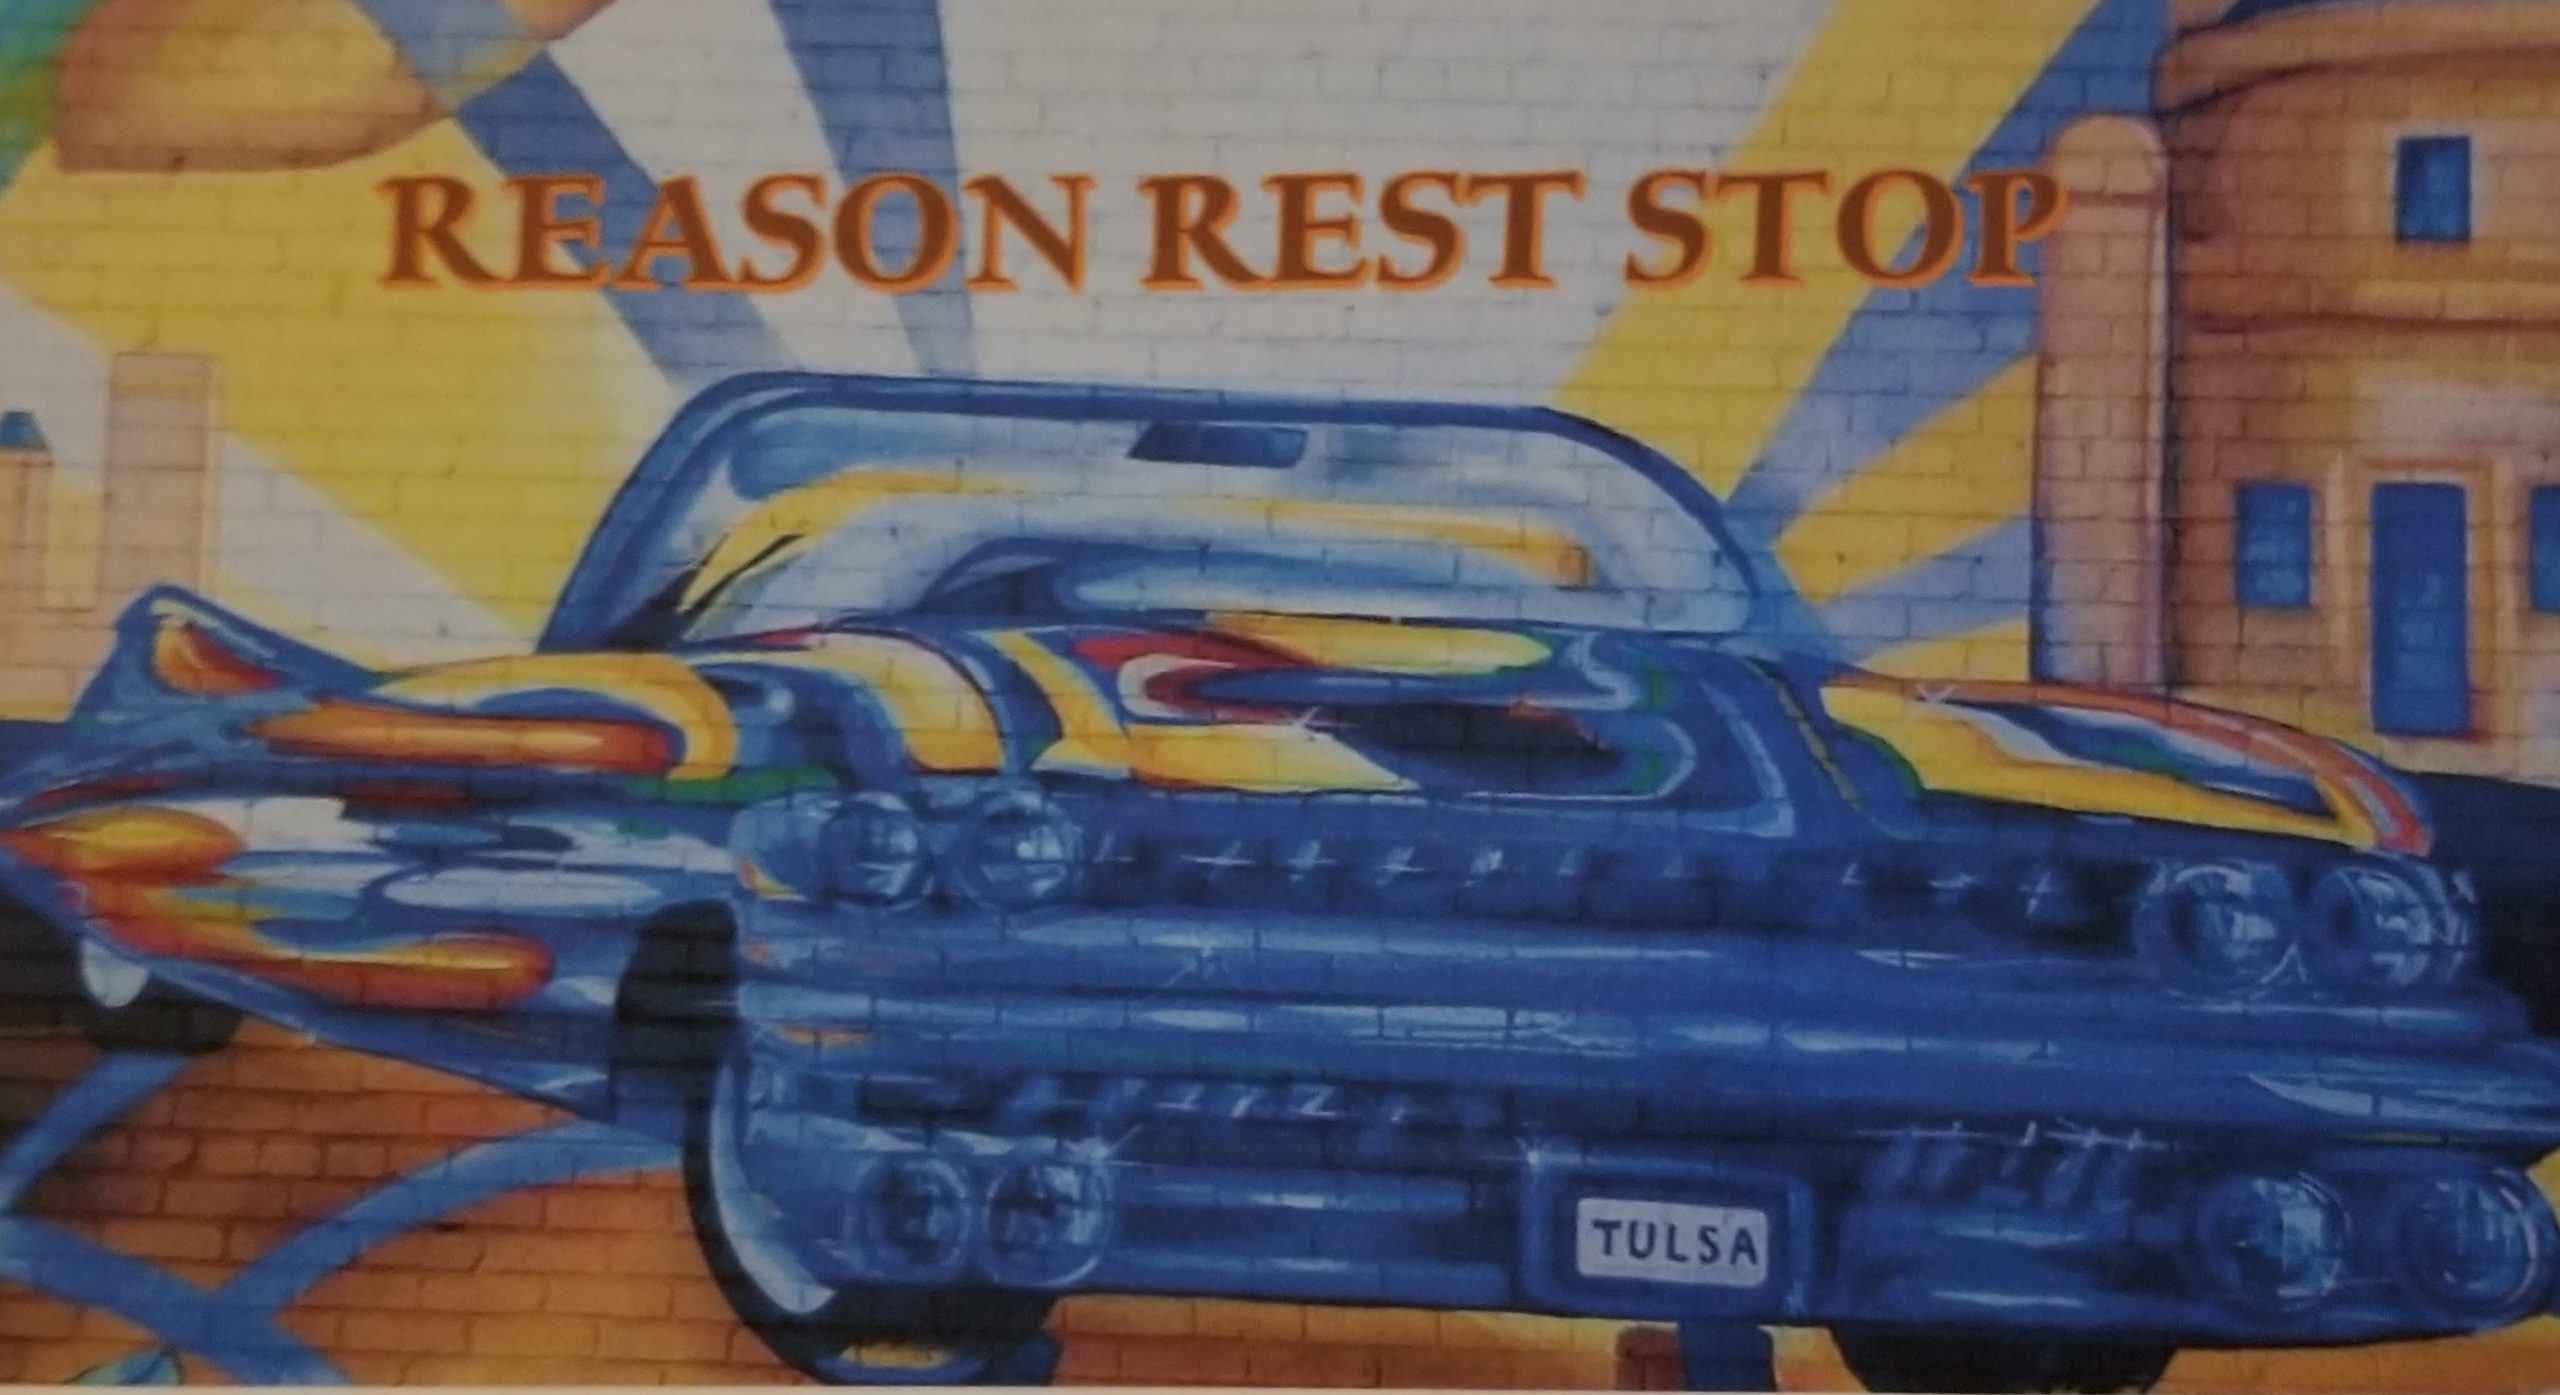 Reason Rest Stop